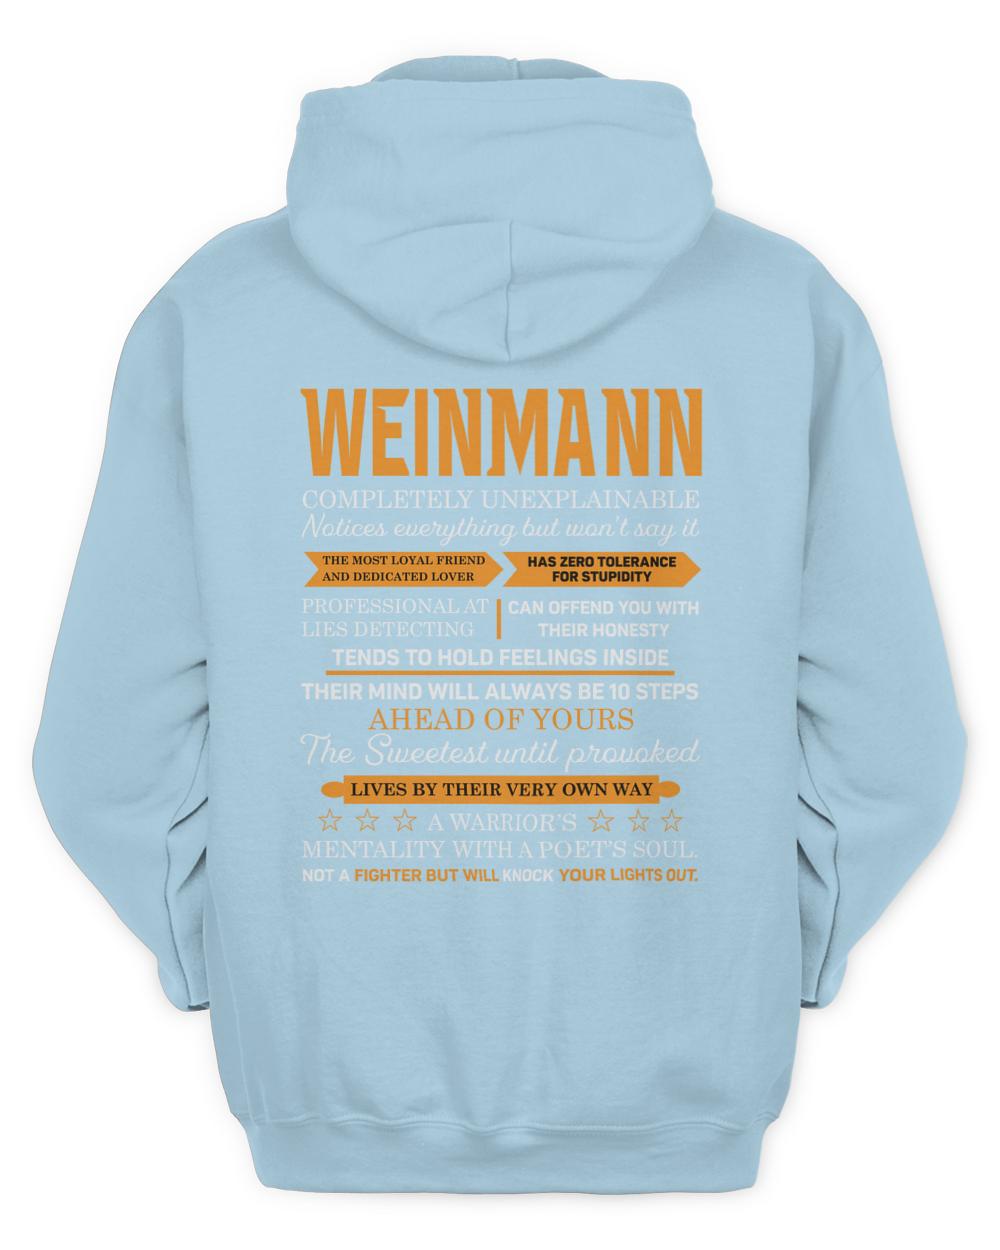 WEINMANN-13K-N1-01